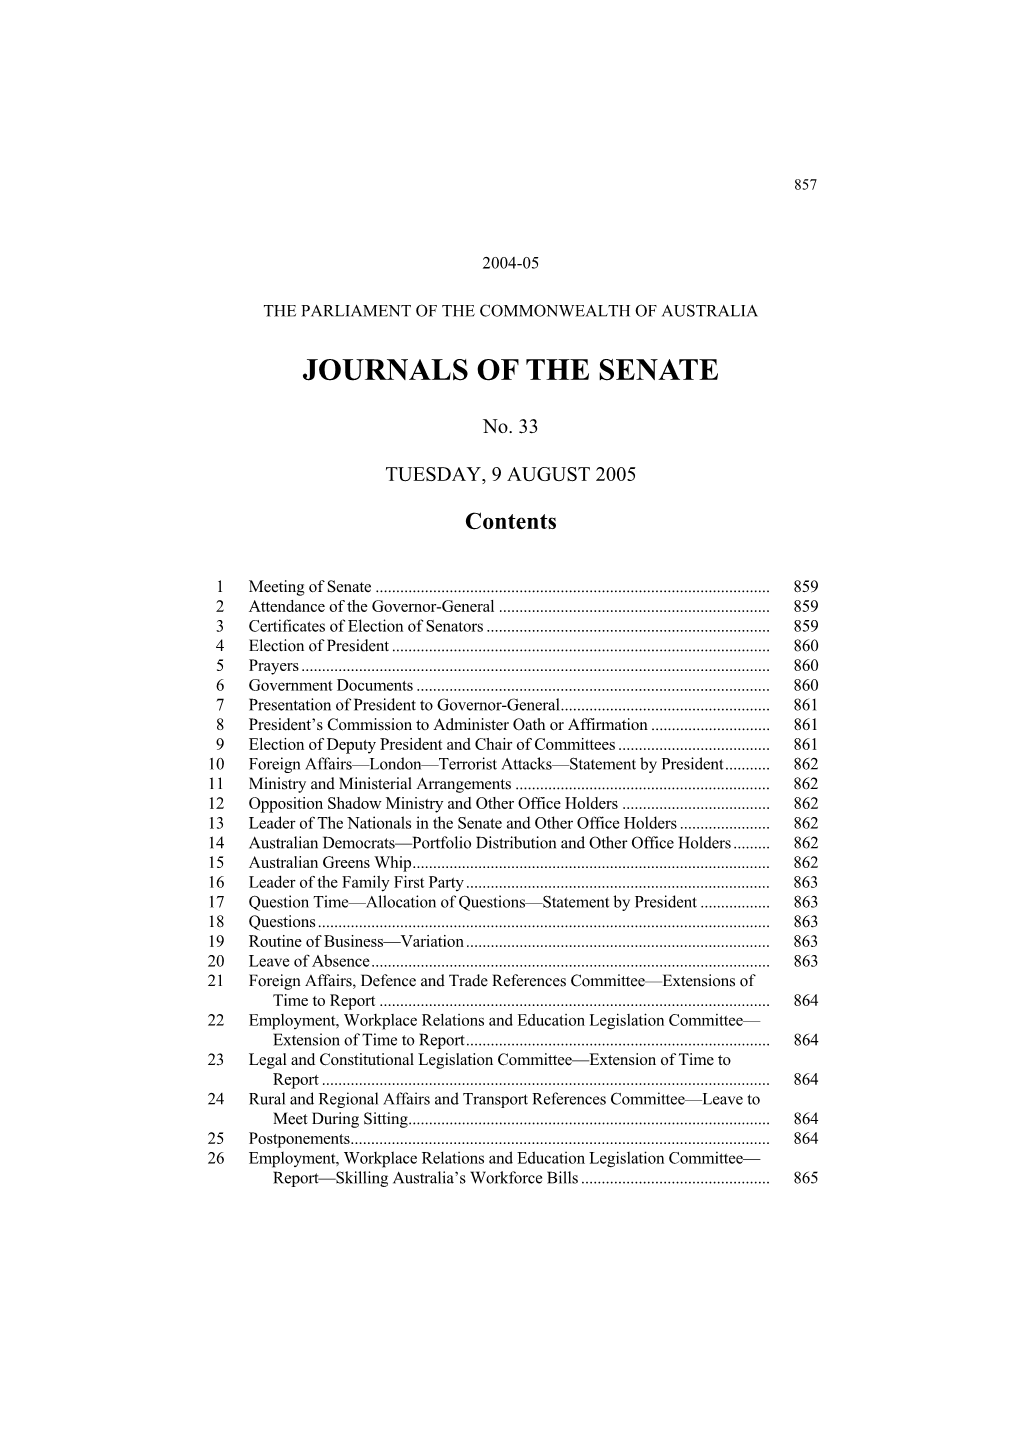 Journals of the Senate